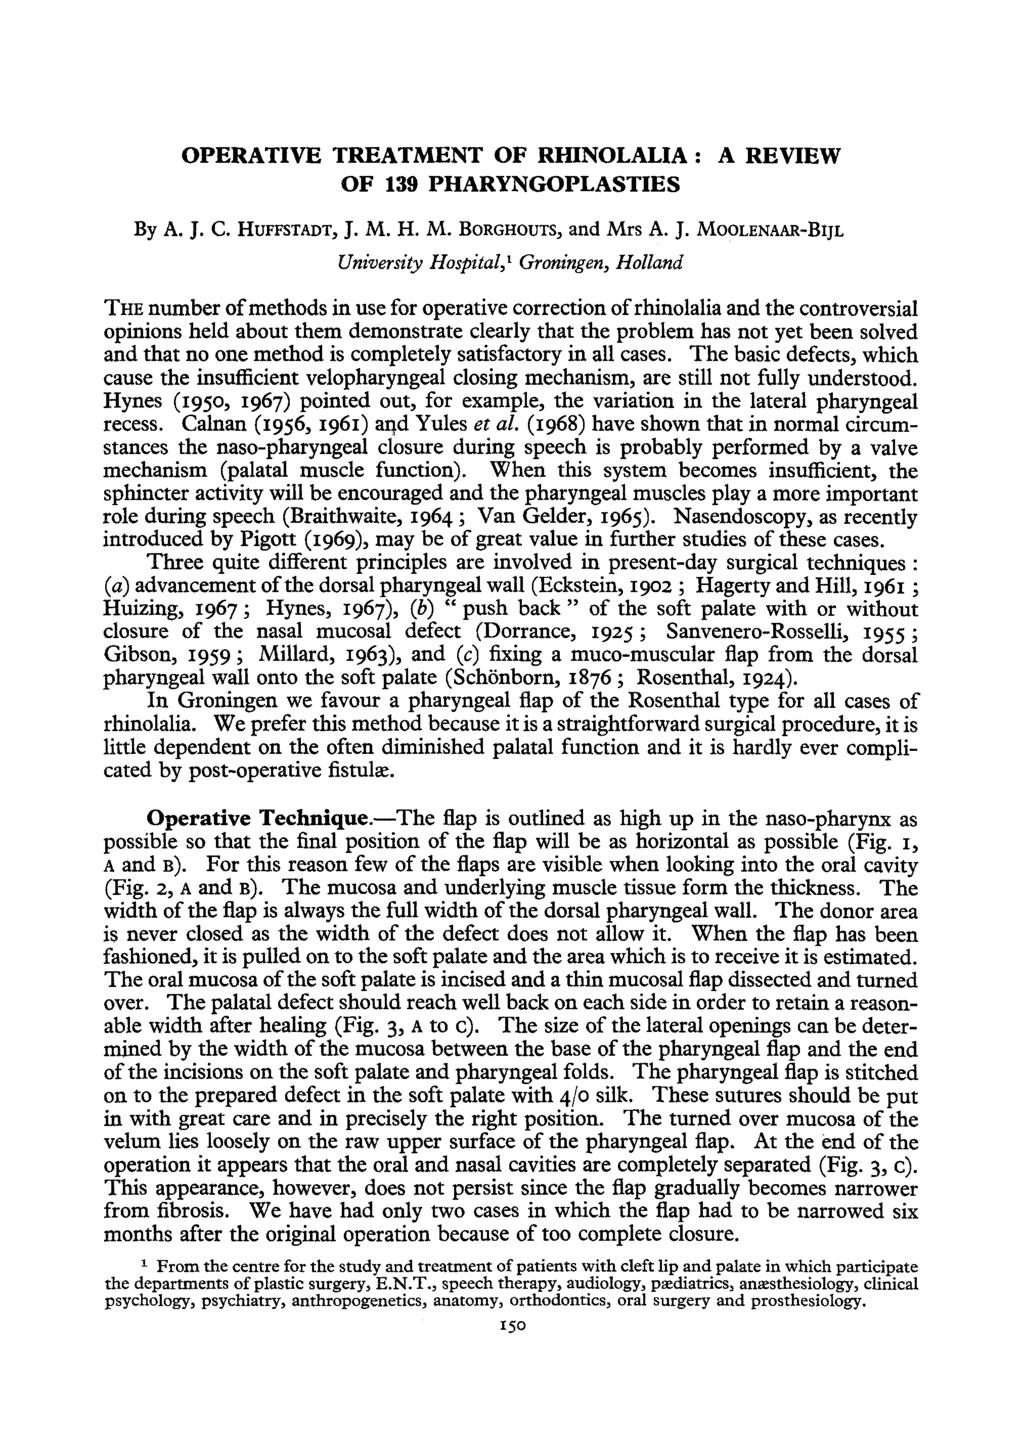 OPERATIVE TREATMENT OF RHINOLALIA : A REVIEW OF 139 PHARYNGOPLASTIES By A. J.